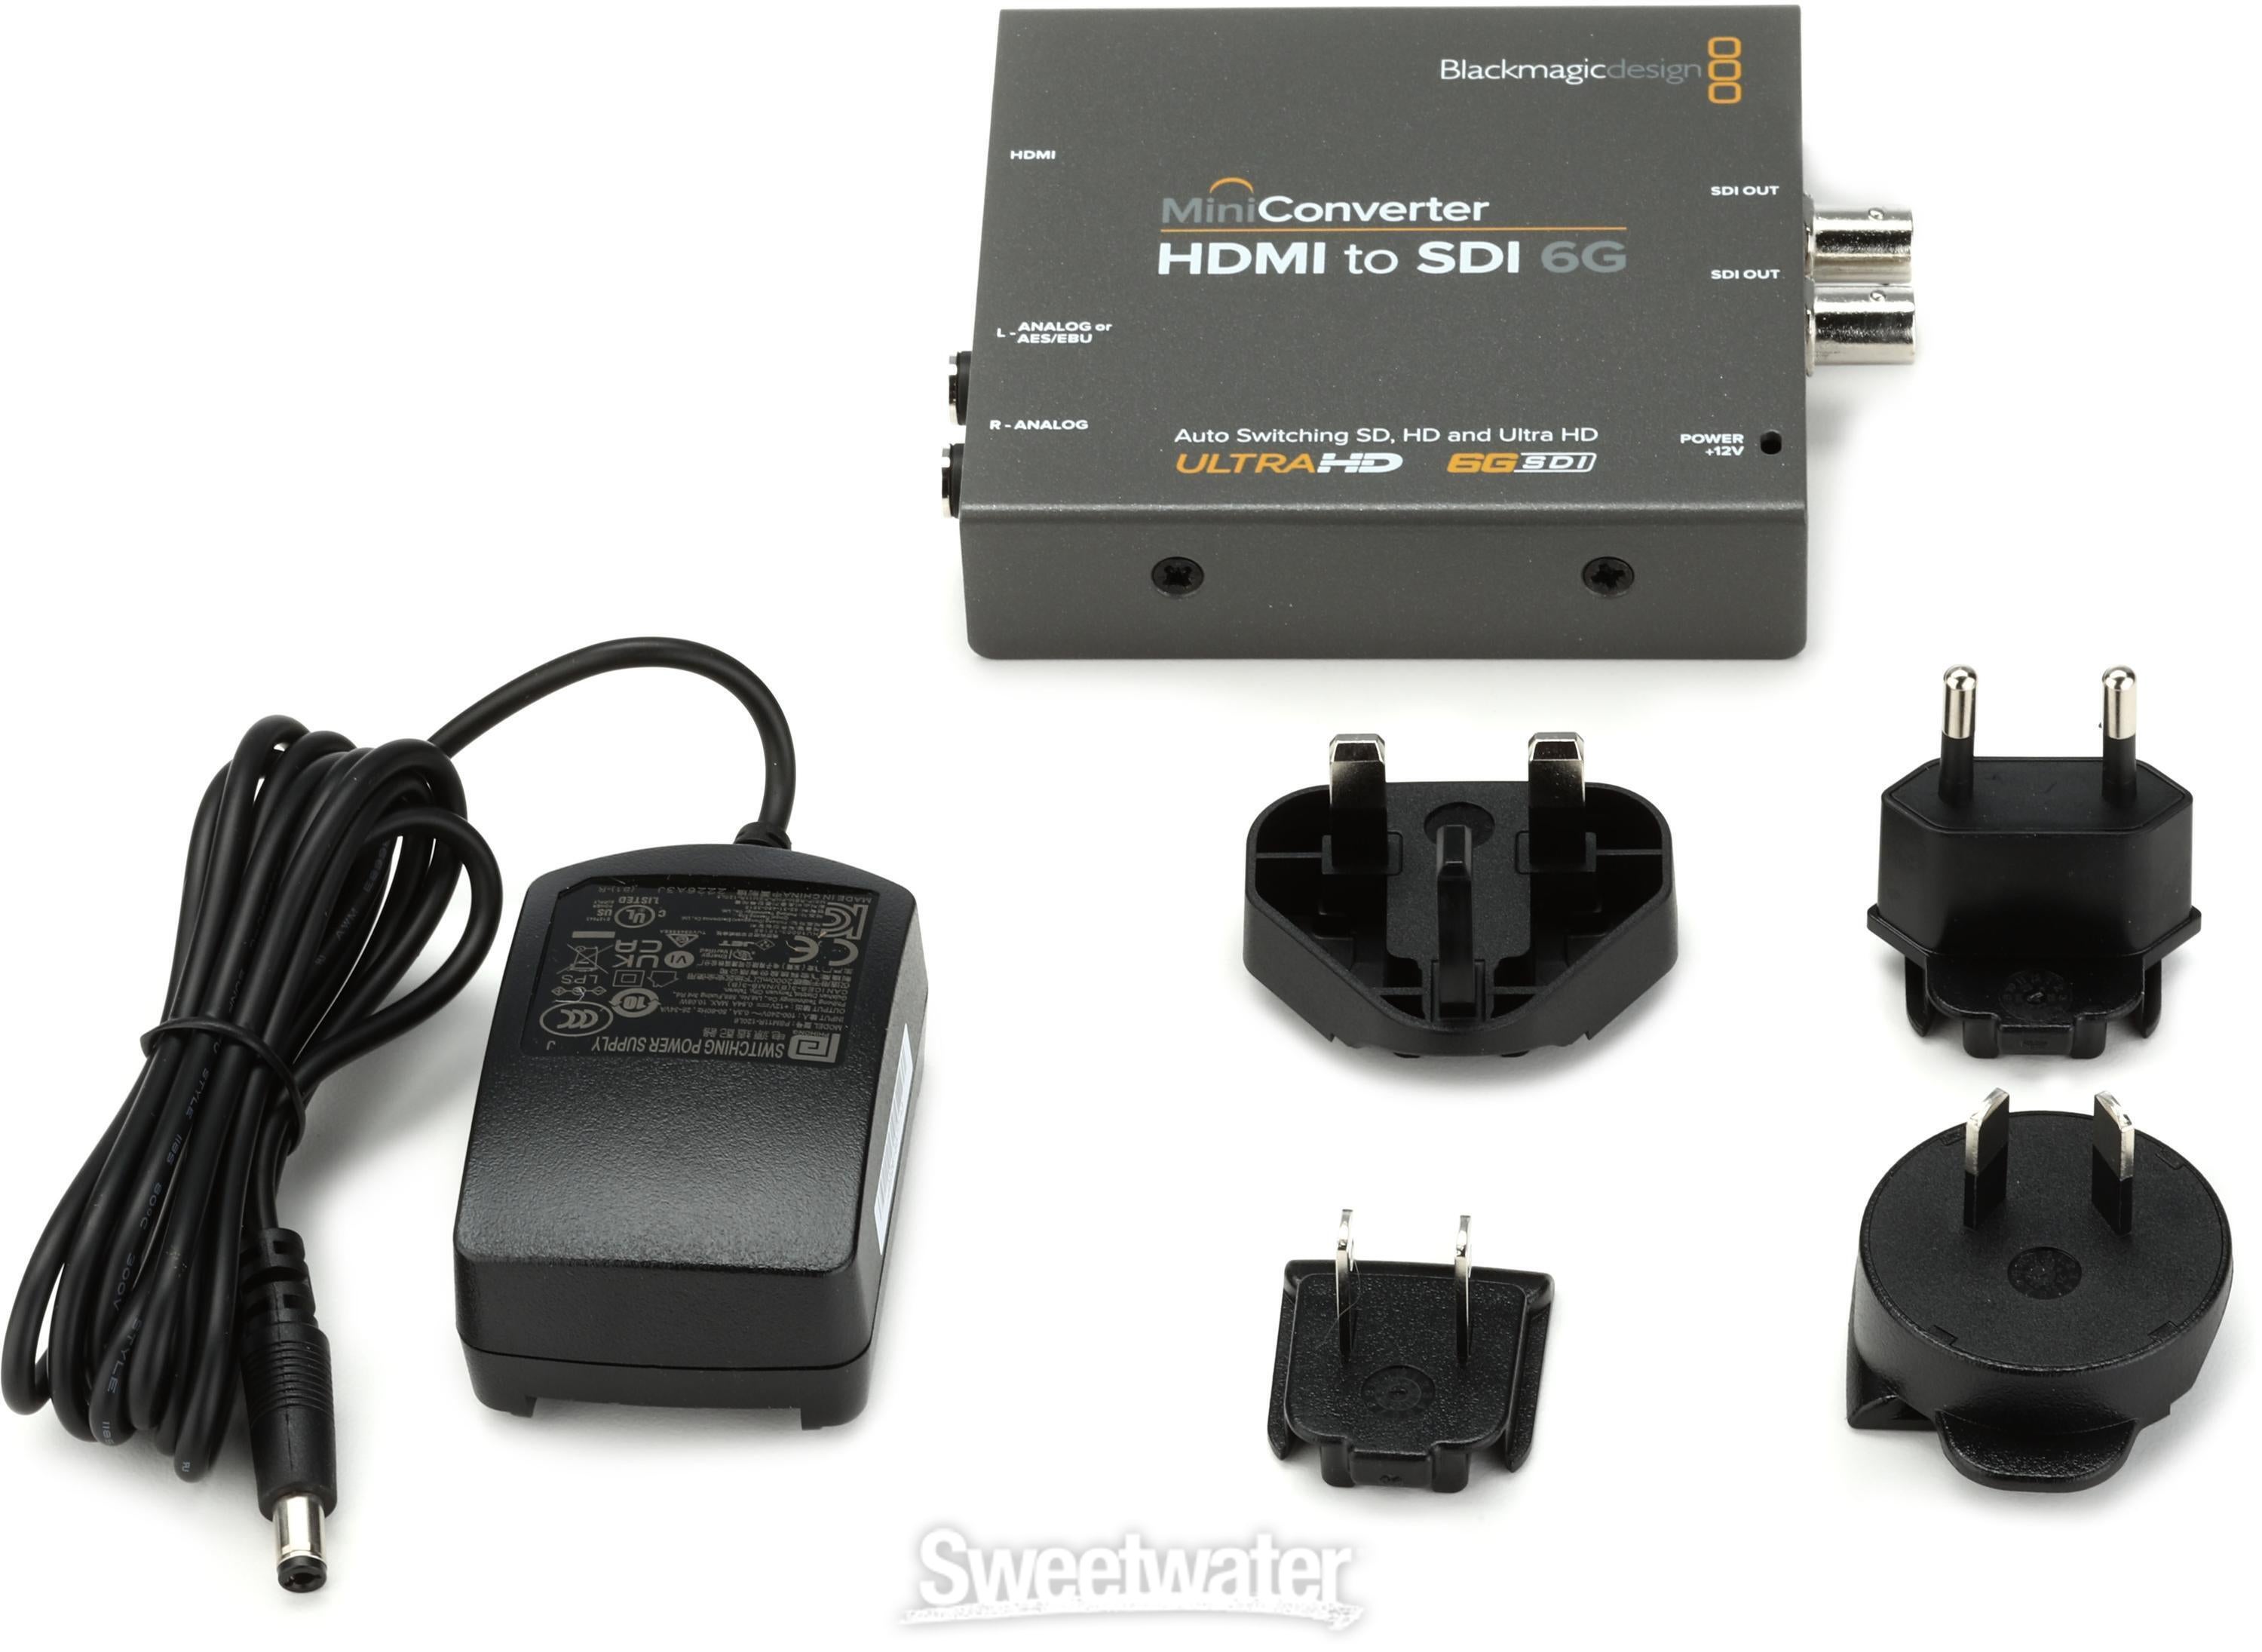 Blackmagic Design Mini Converter HDMI to SDI 6G Sweetwater